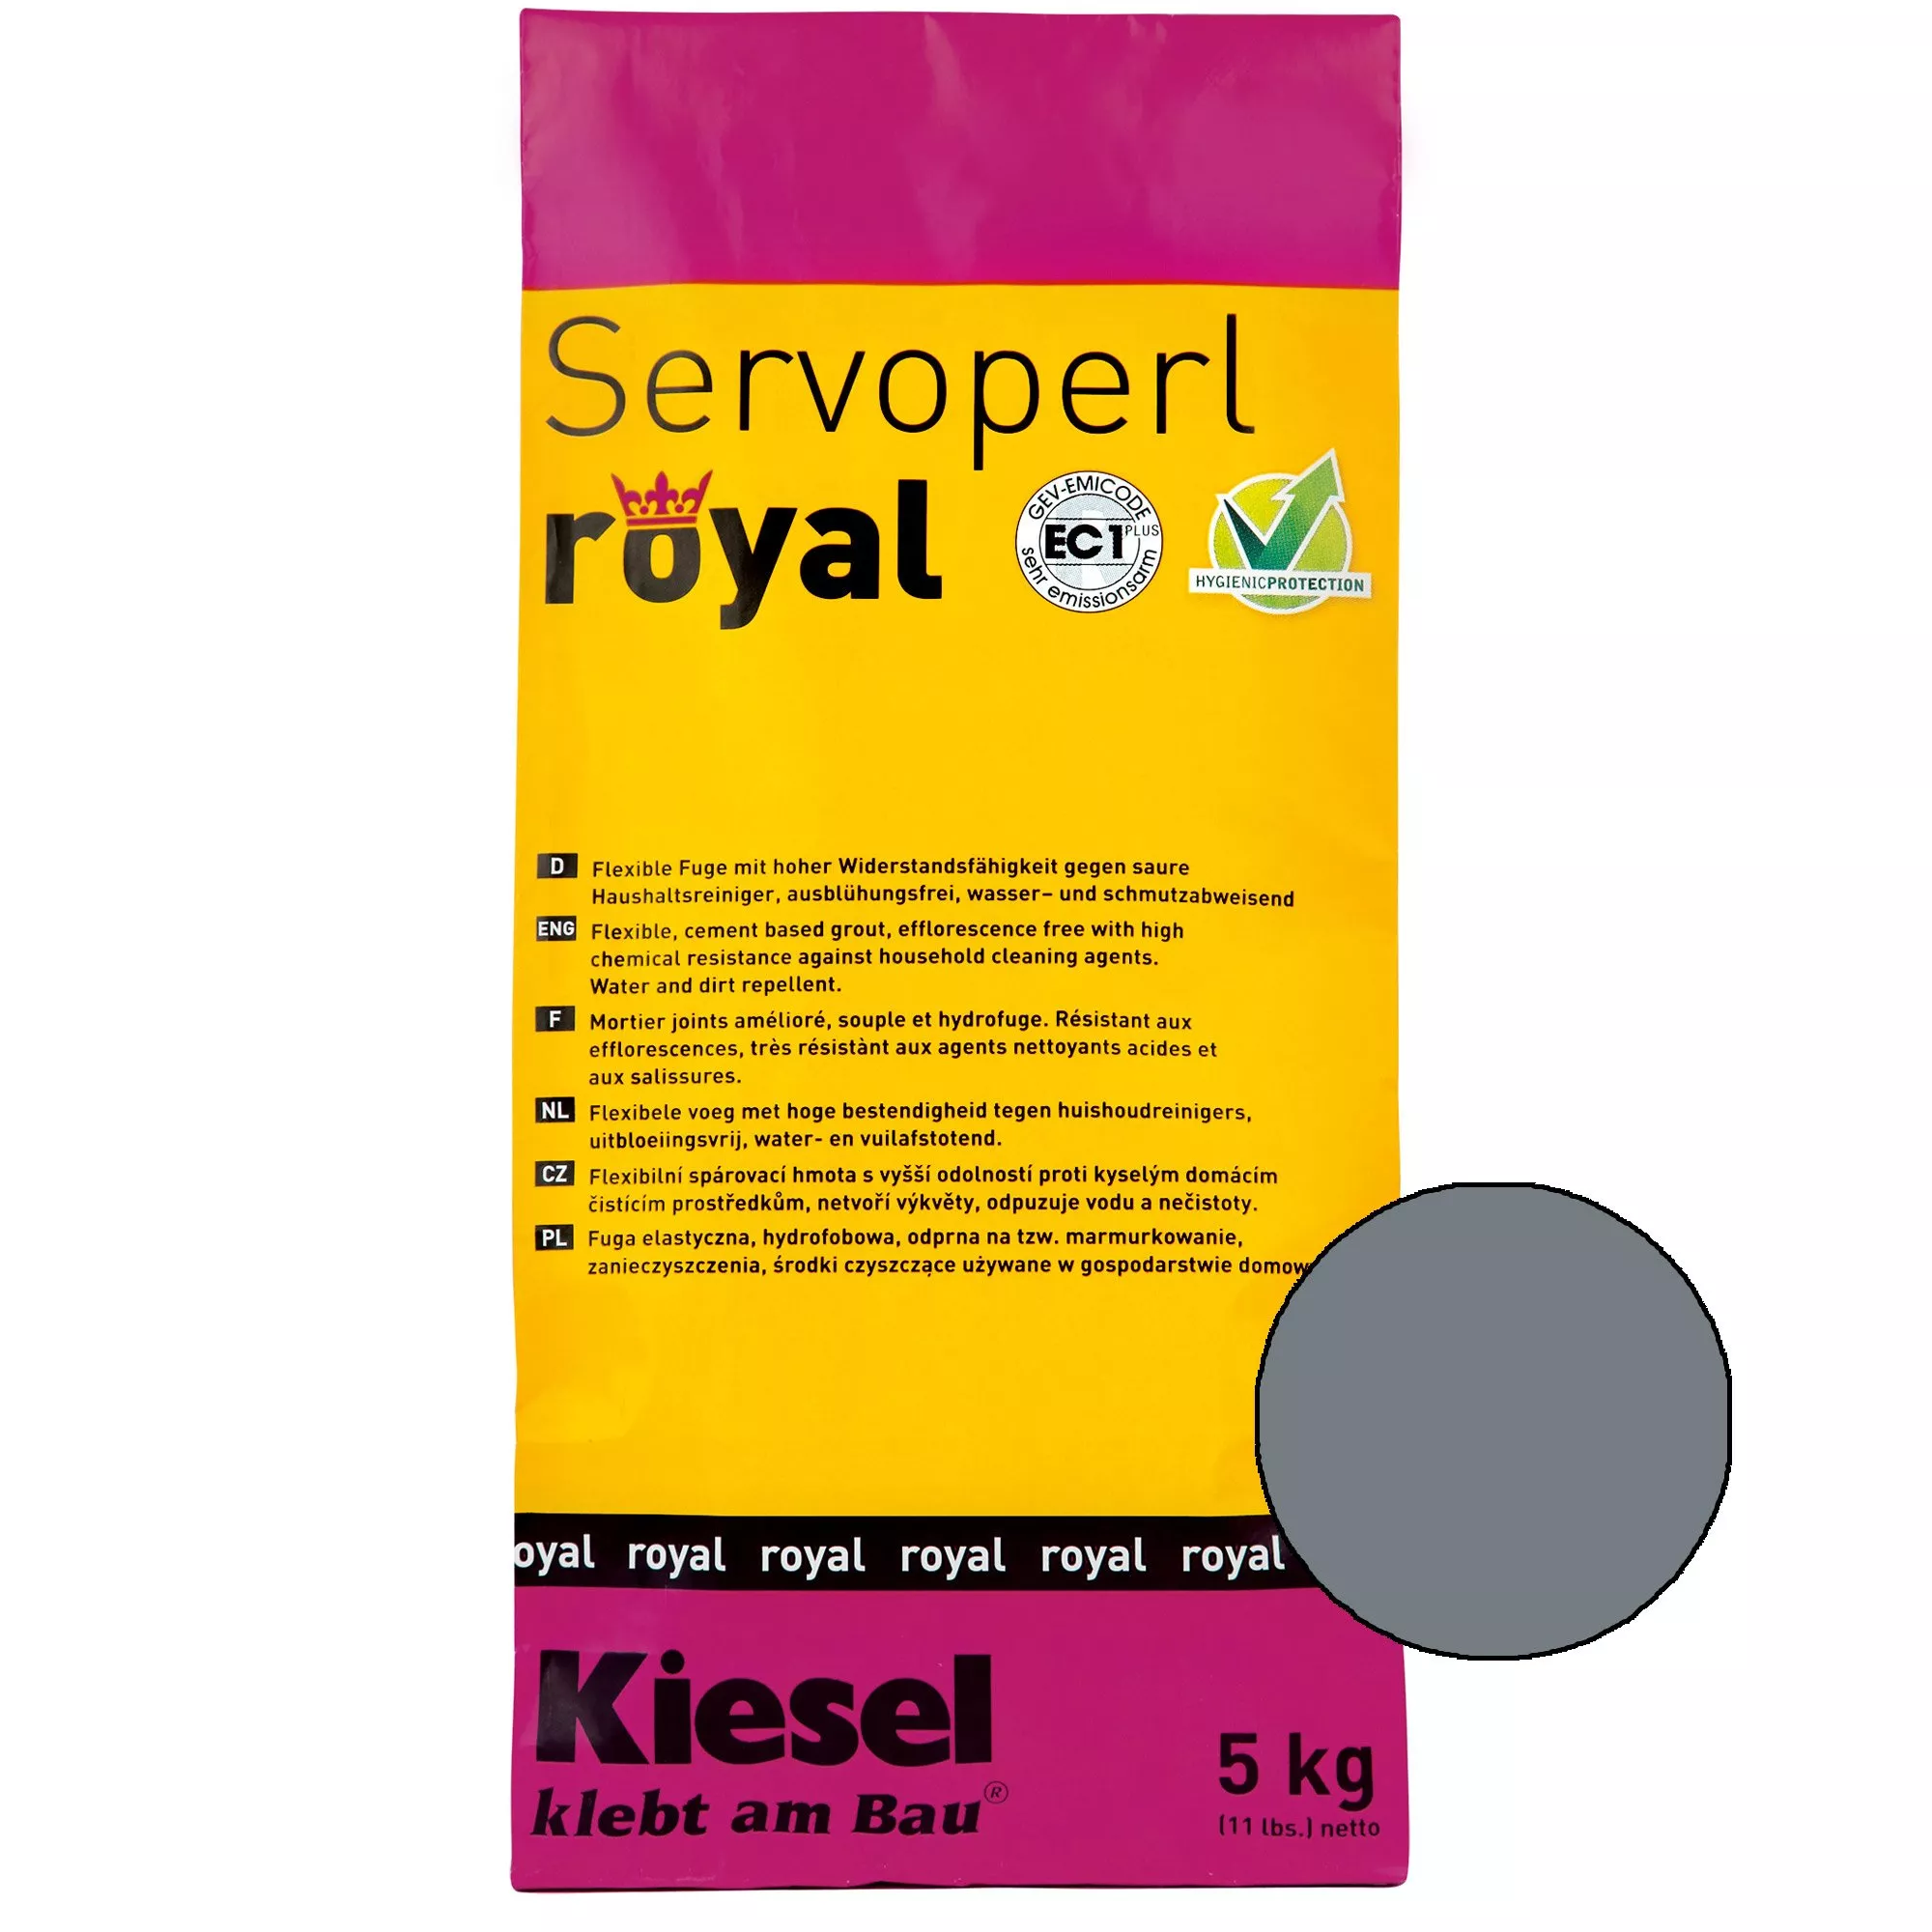 Kiesel Servoperl royal - flexible, water- and dirt-repellent joint (5KG basalt)